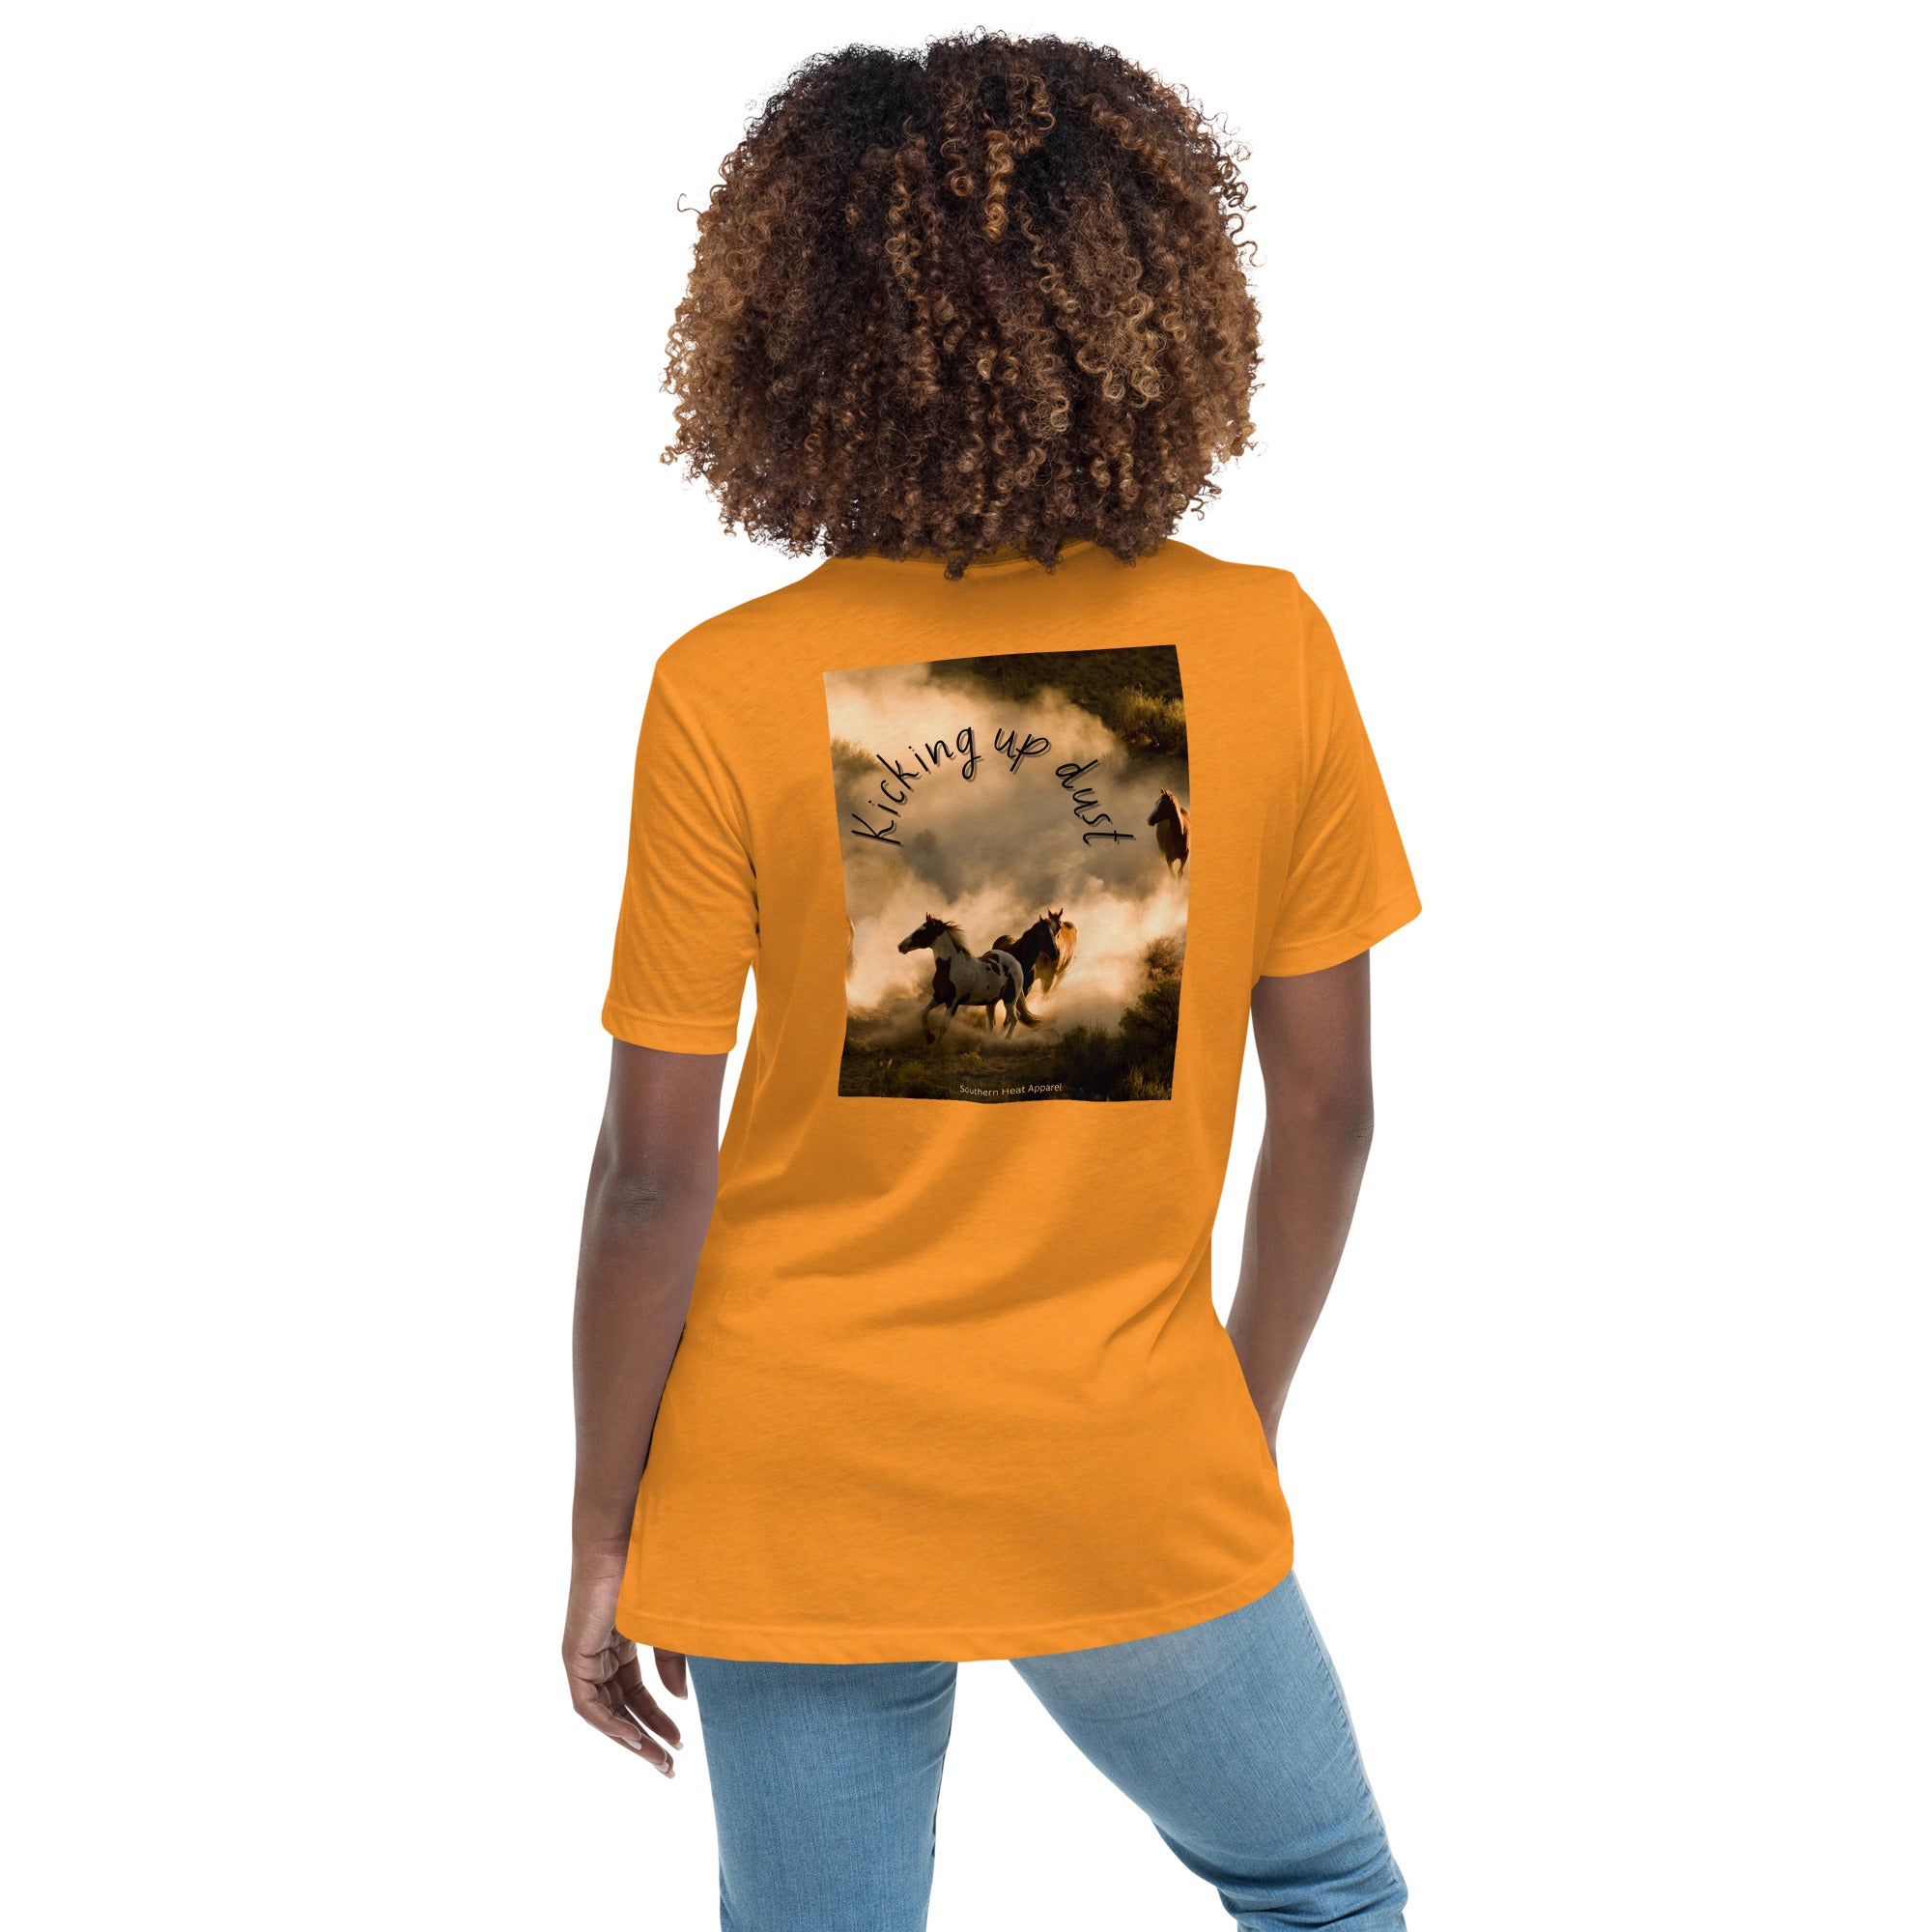 Kicking up dust-Women's Relaxed T-Shirt